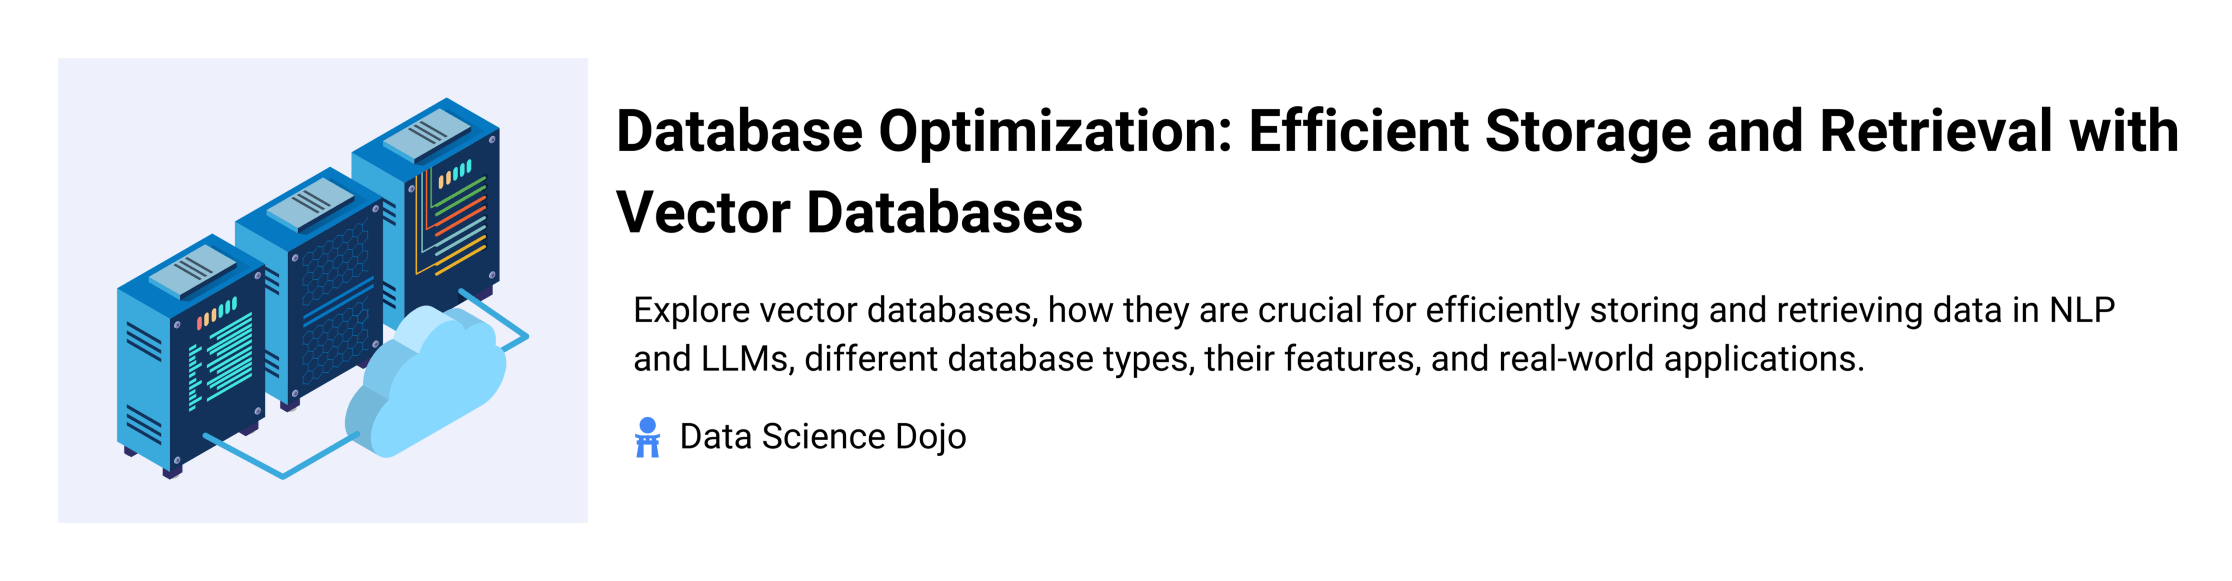 database optimization - vector databases